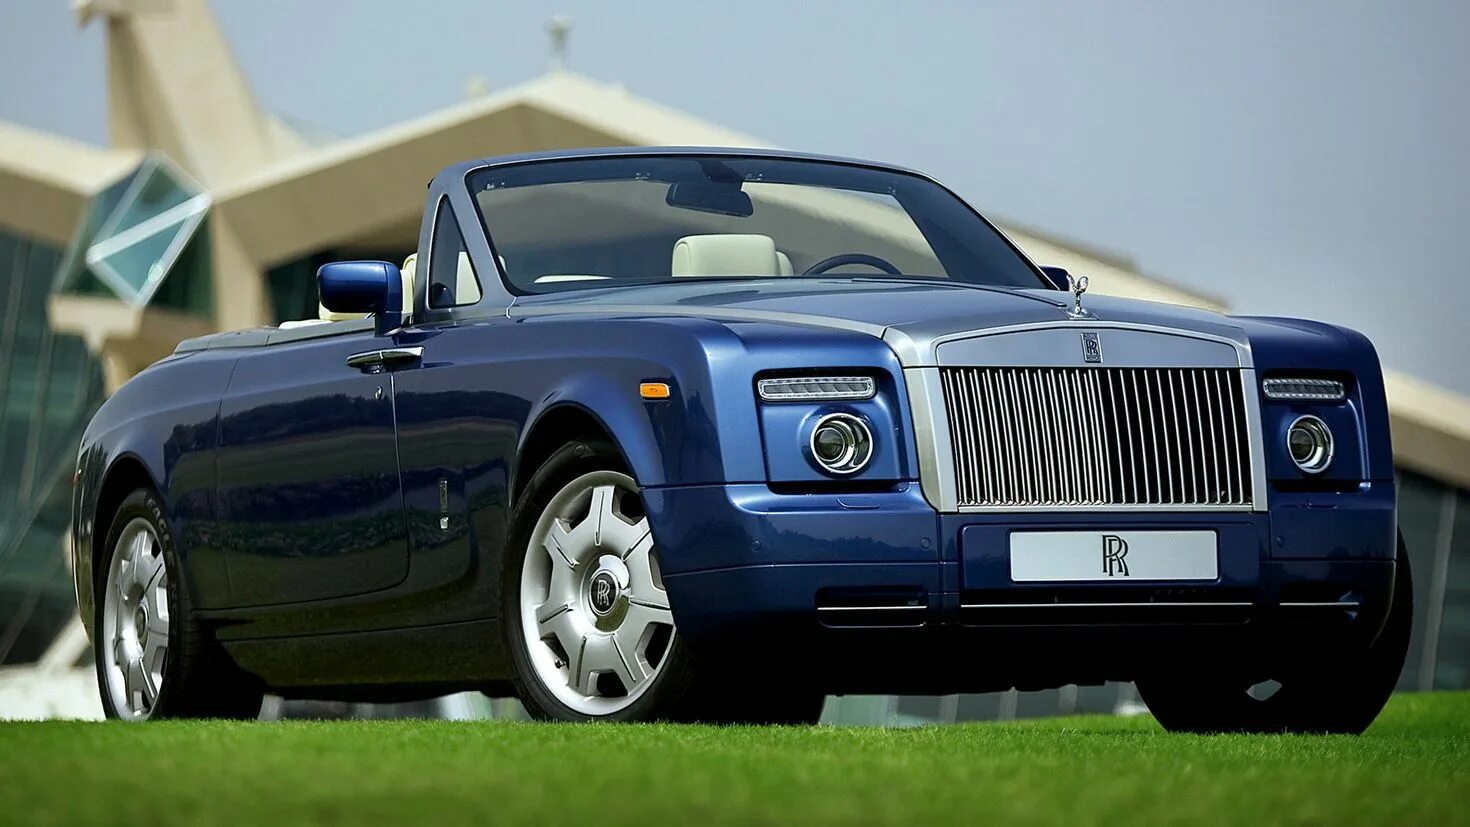 Rolls royce arcadia. Rolls Royce Phantom Drophead Coupe. Rolls Royce Drophead 2007. Rolls Royce Phantom Drophead 2008. Rolls Royce Phantom 2007.